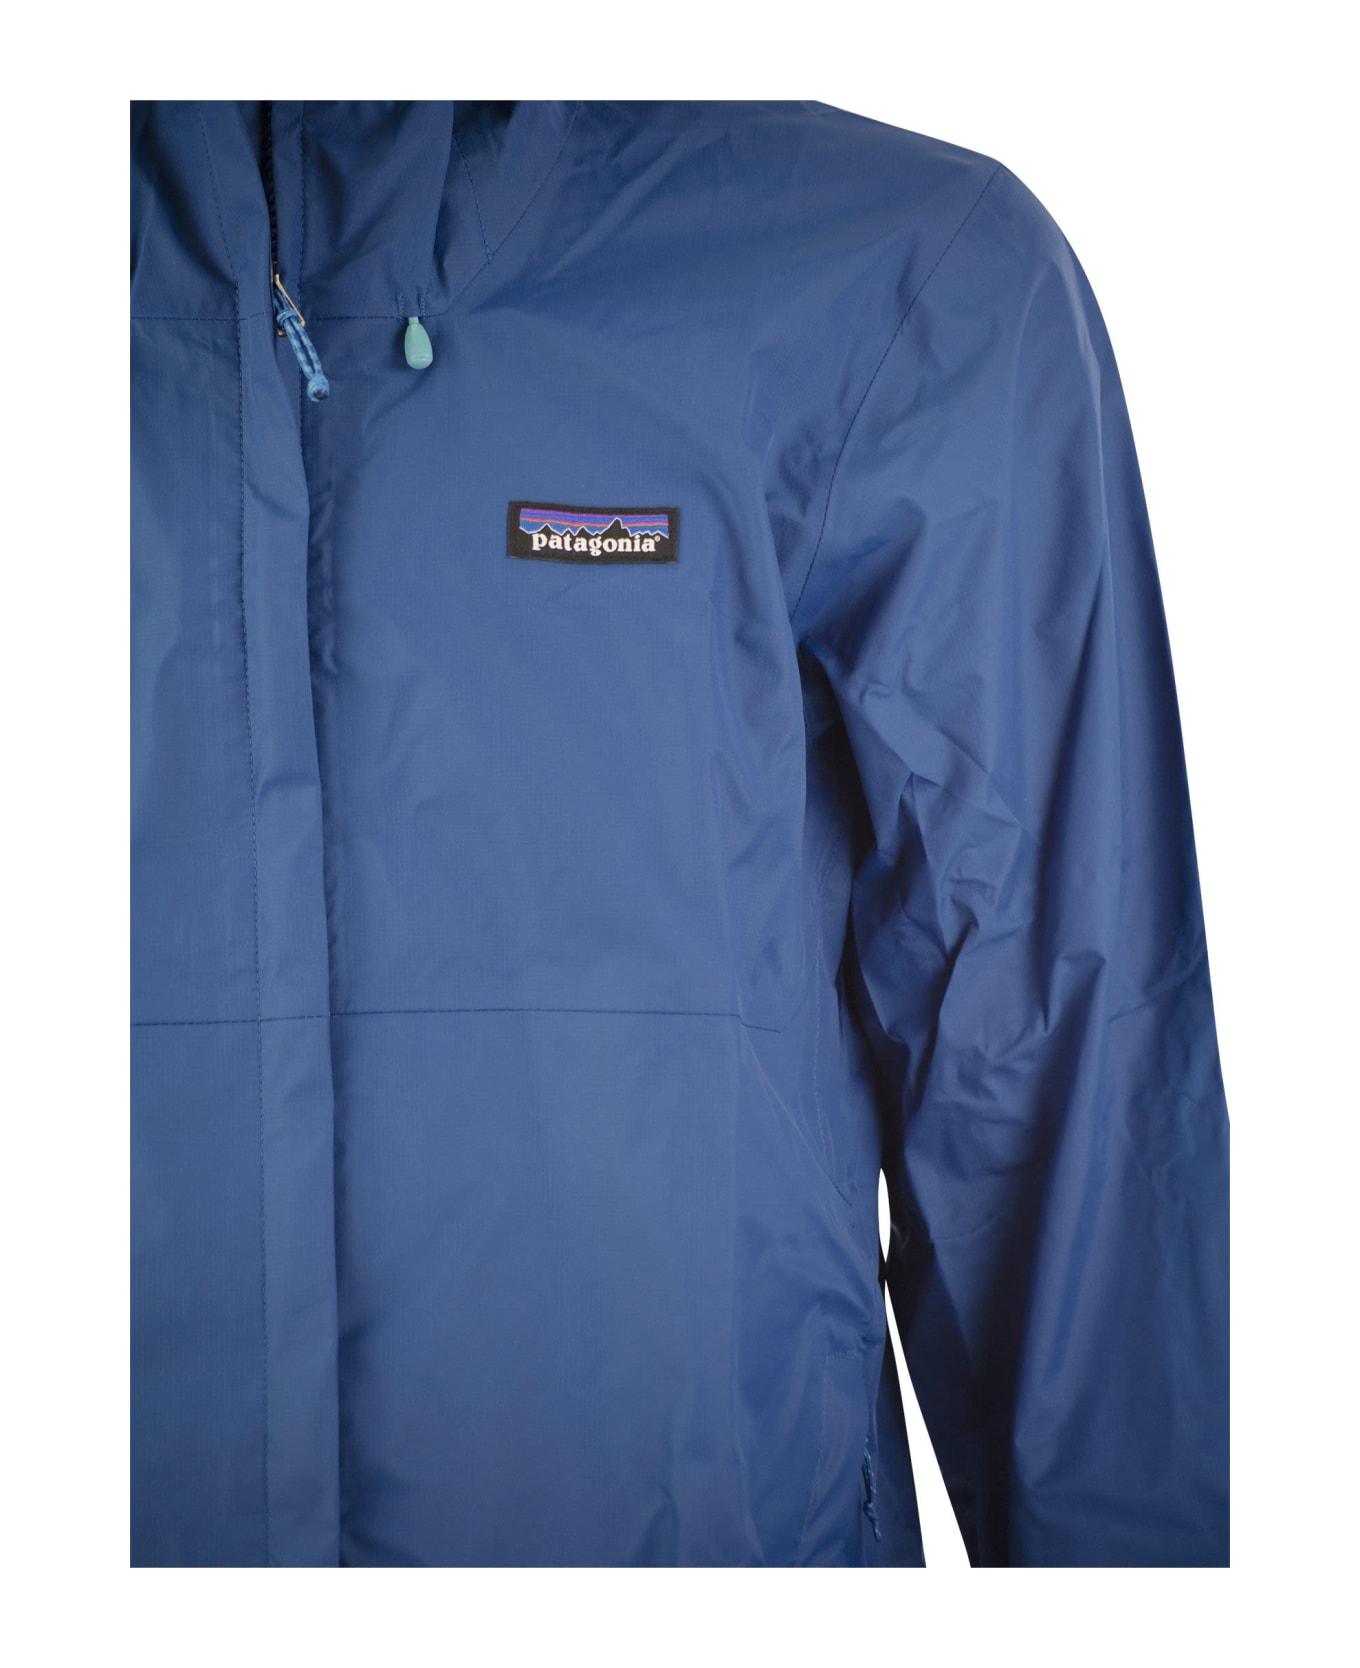 Patagonia Nylon Rainproof Jacket - Enlb